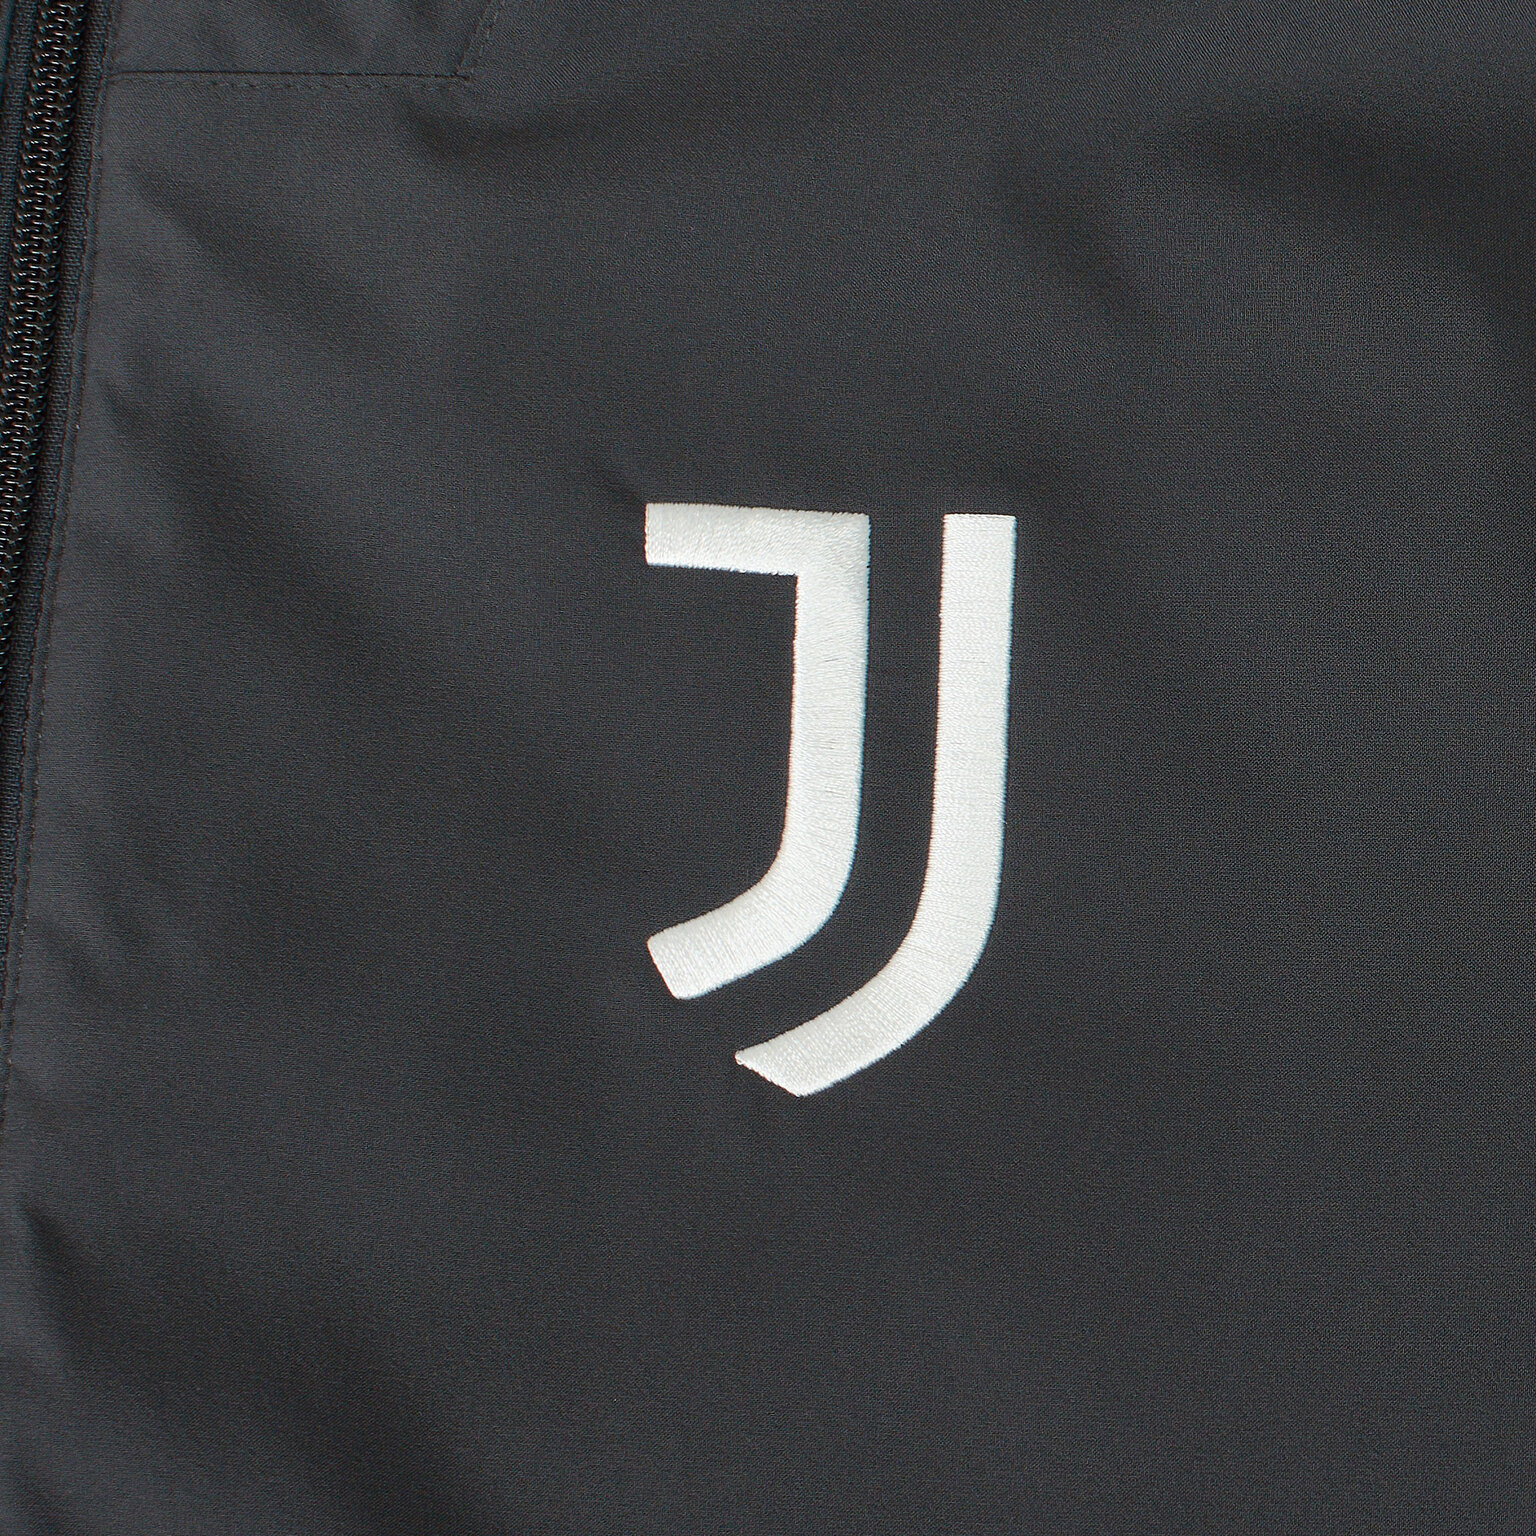 Куртка утепленная Adidas Juventus Winter GR2977